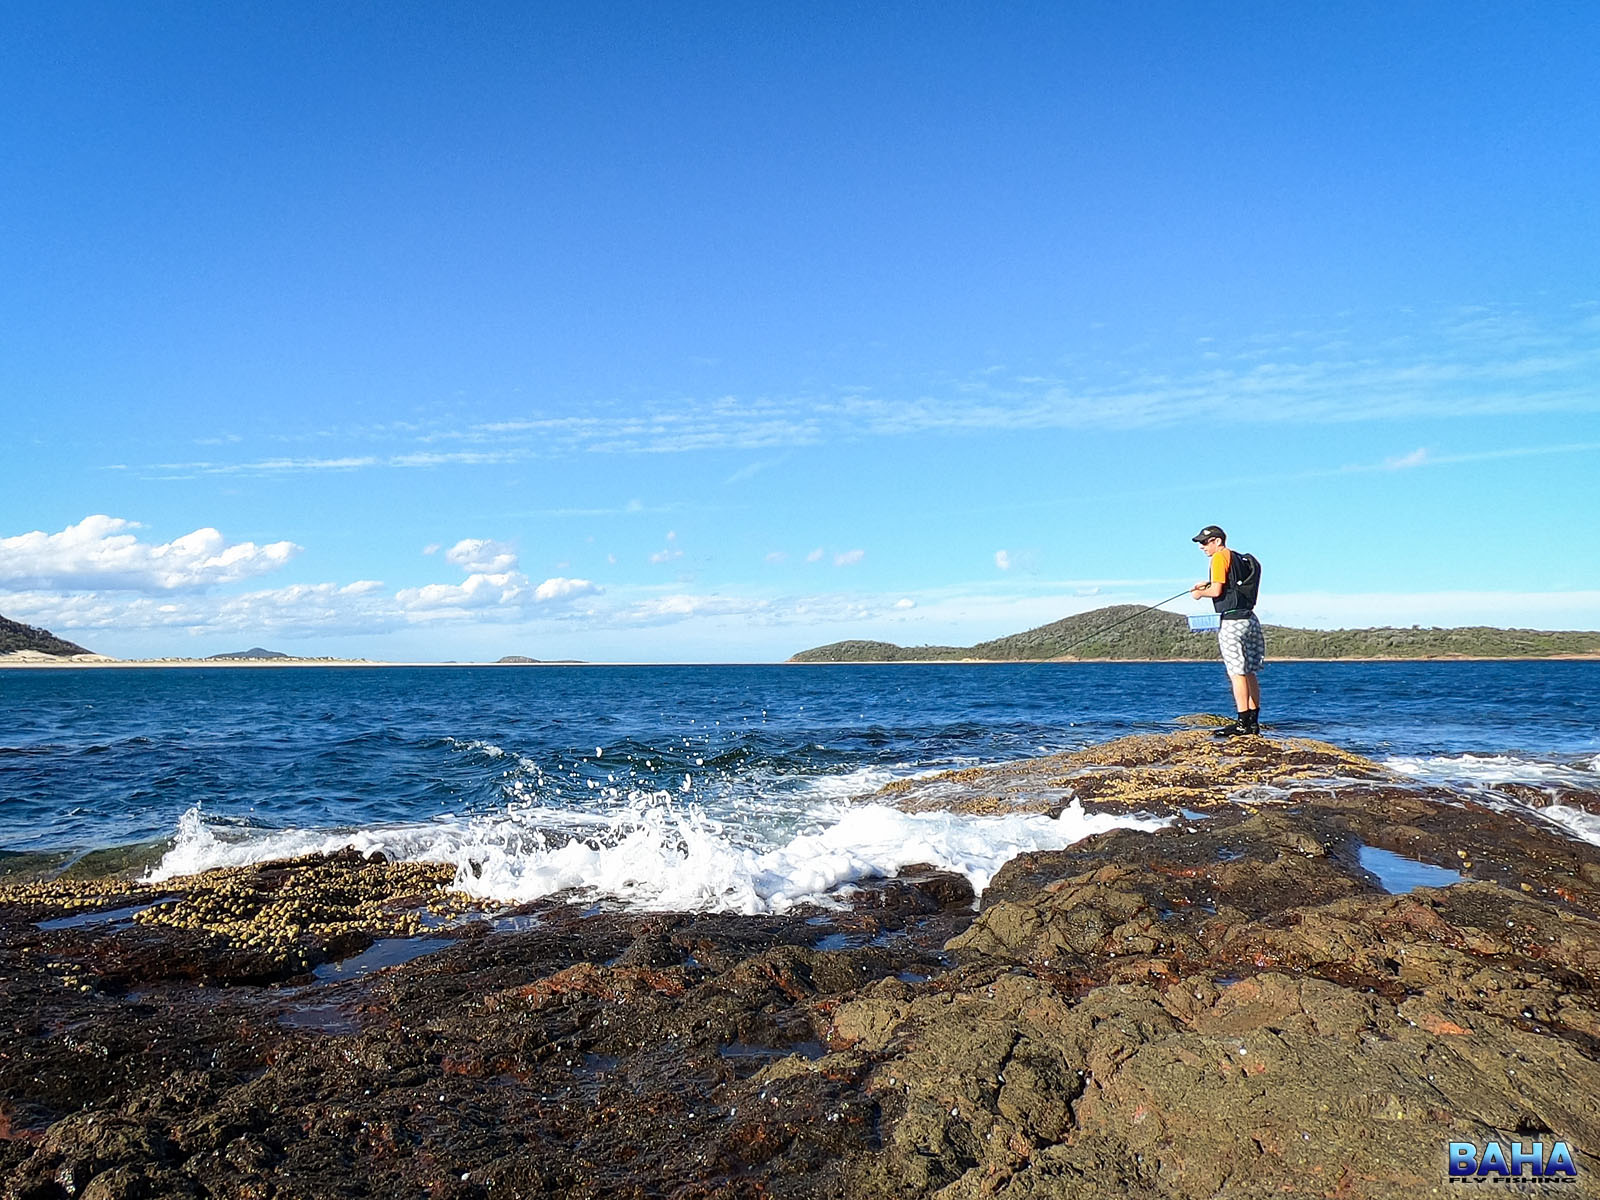 Warren fly fishing the rocks at Fingal Bay